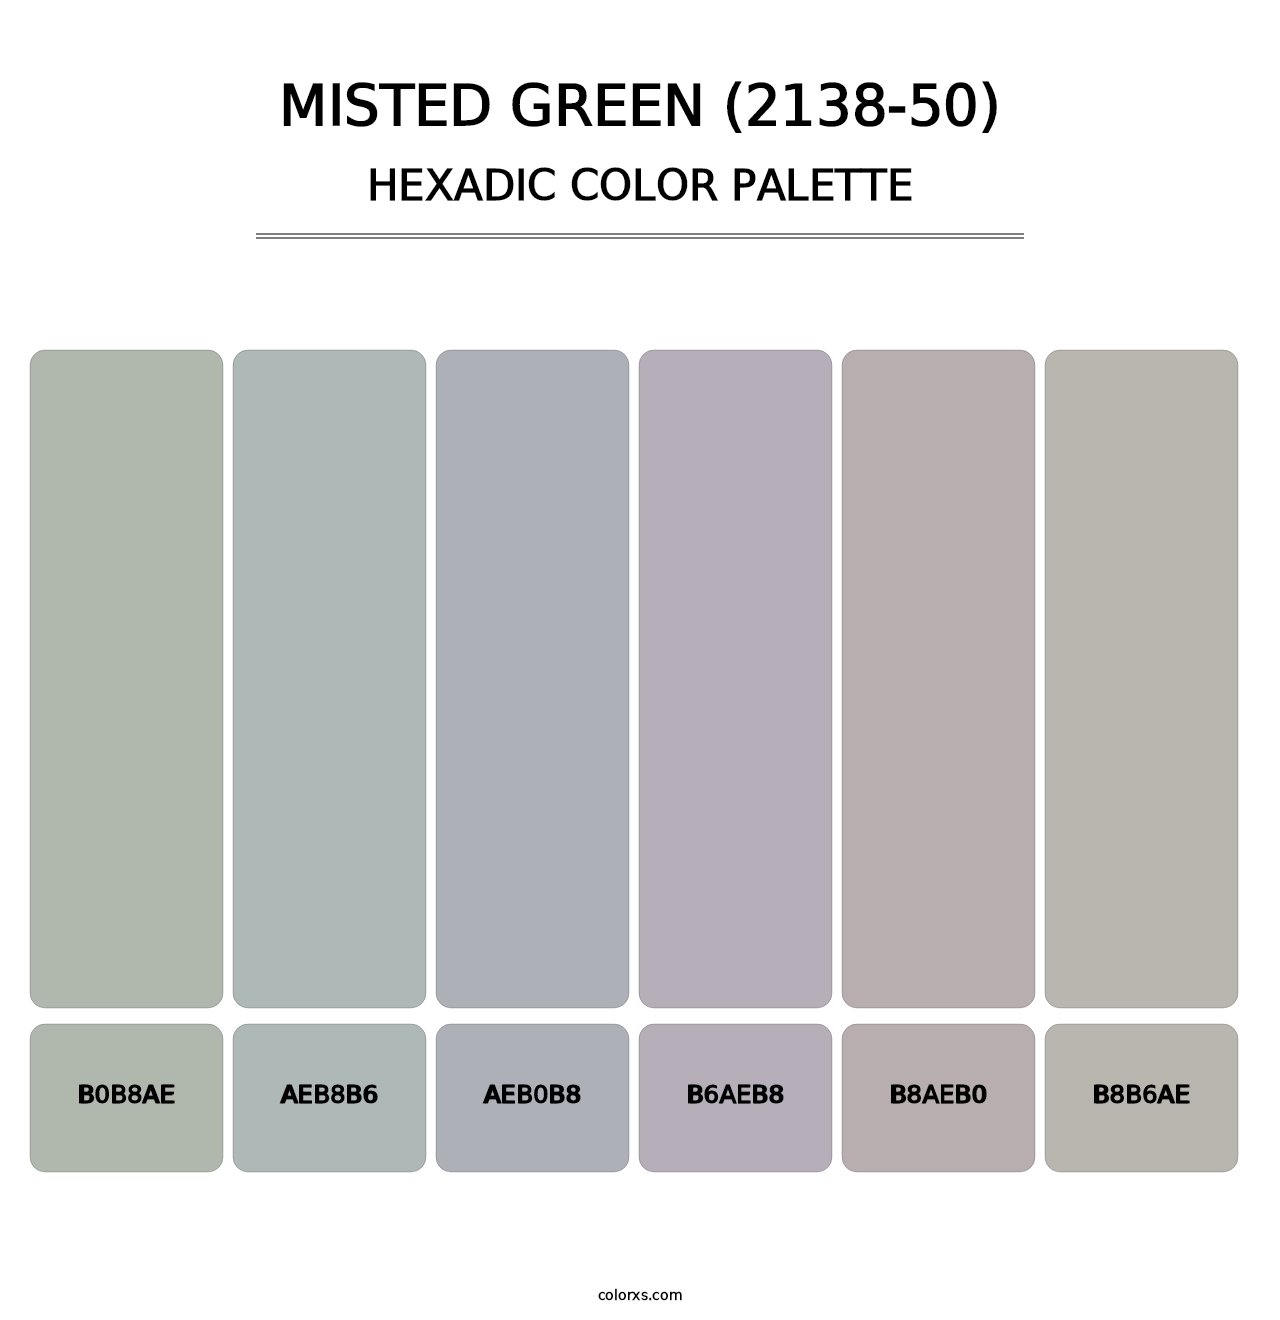 Misted Green (2138-50) - Hexadic Color Palette